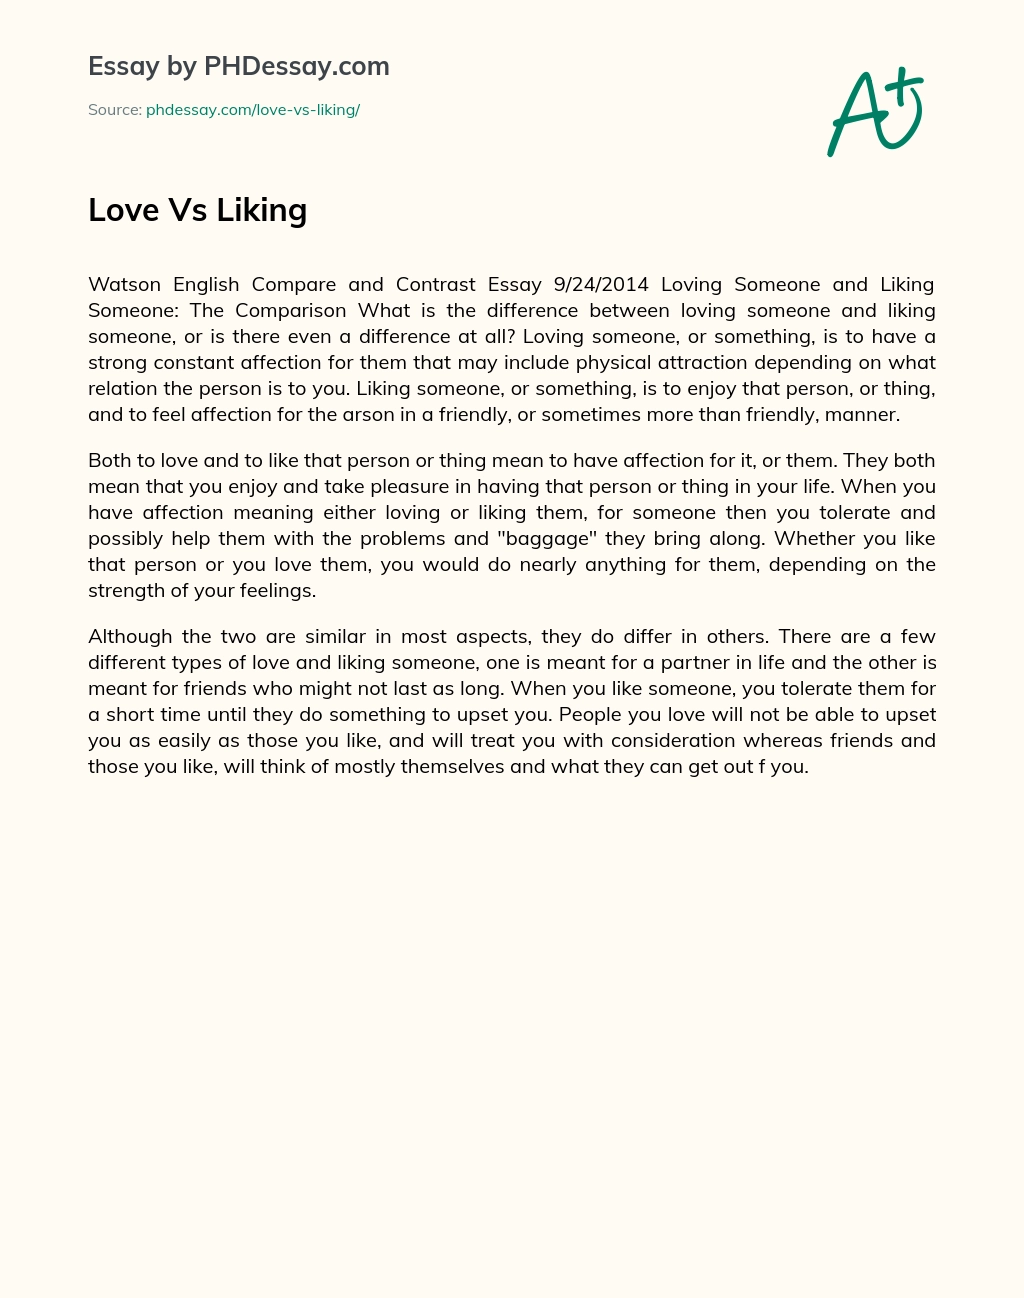 Love Vs Liking essay